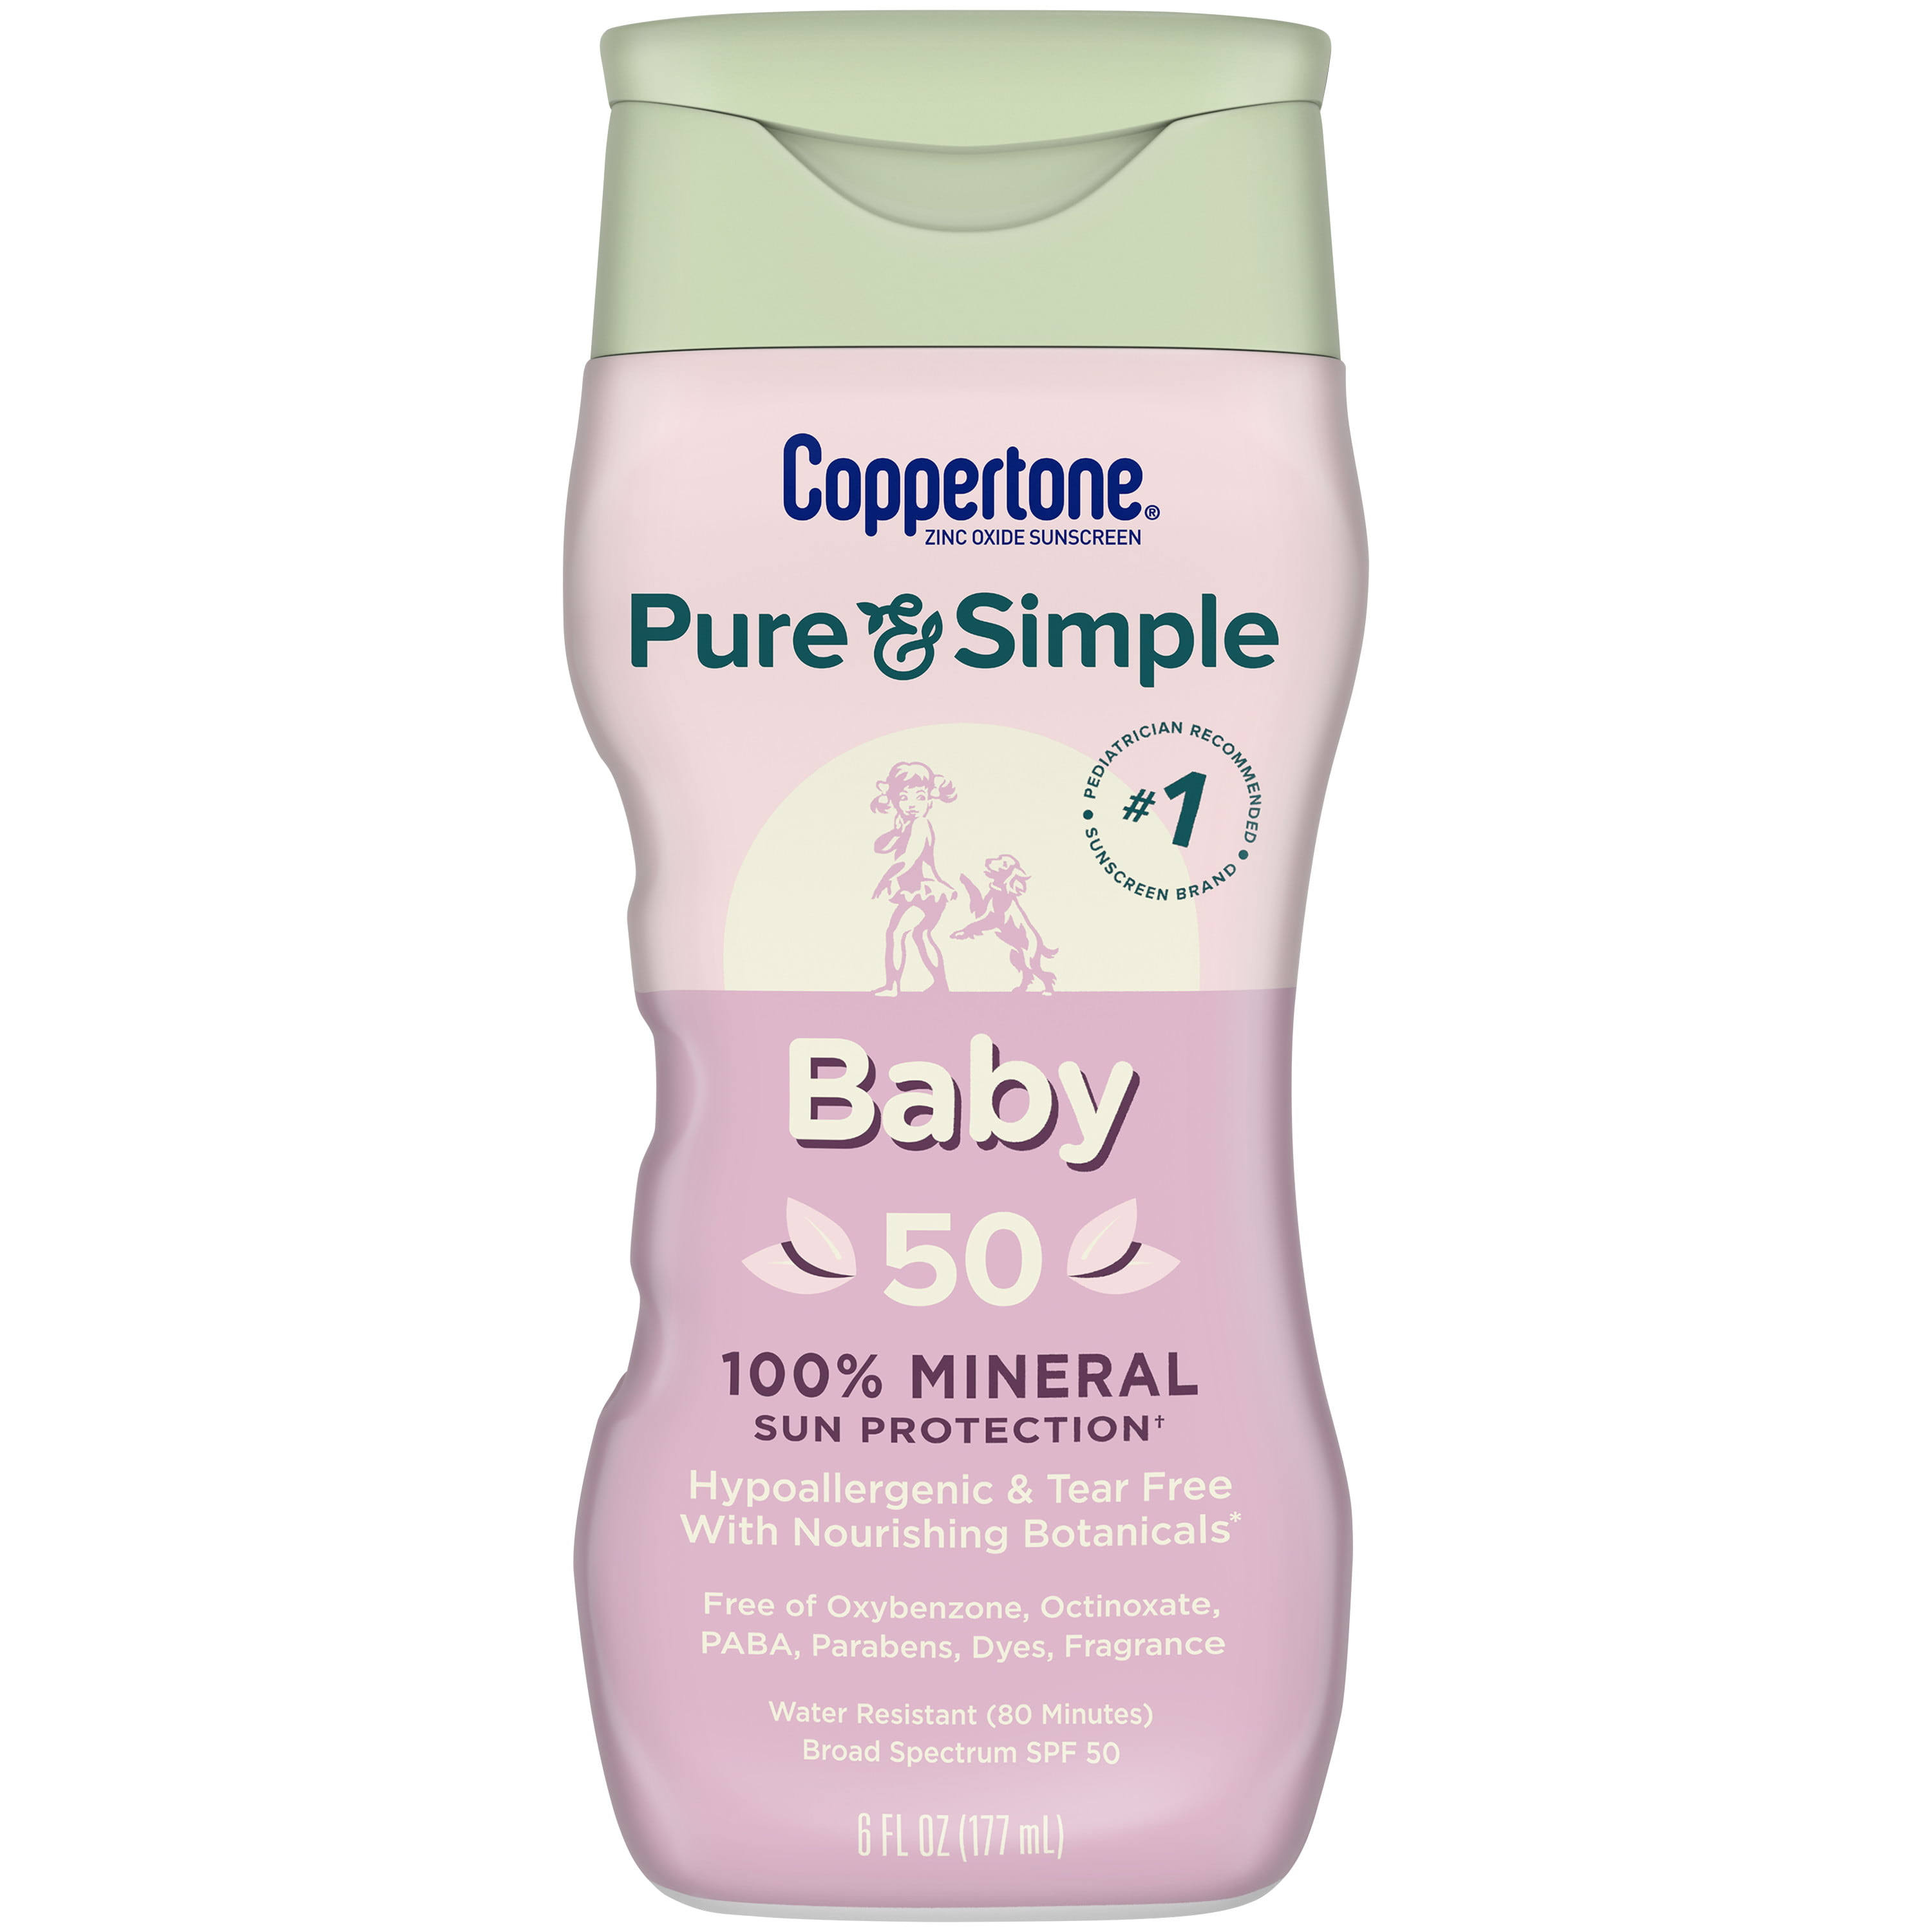 Coppertone Pure & Simple Baby Mineral Sunscreen Lotion SPF 50 - 6.0 fl oz